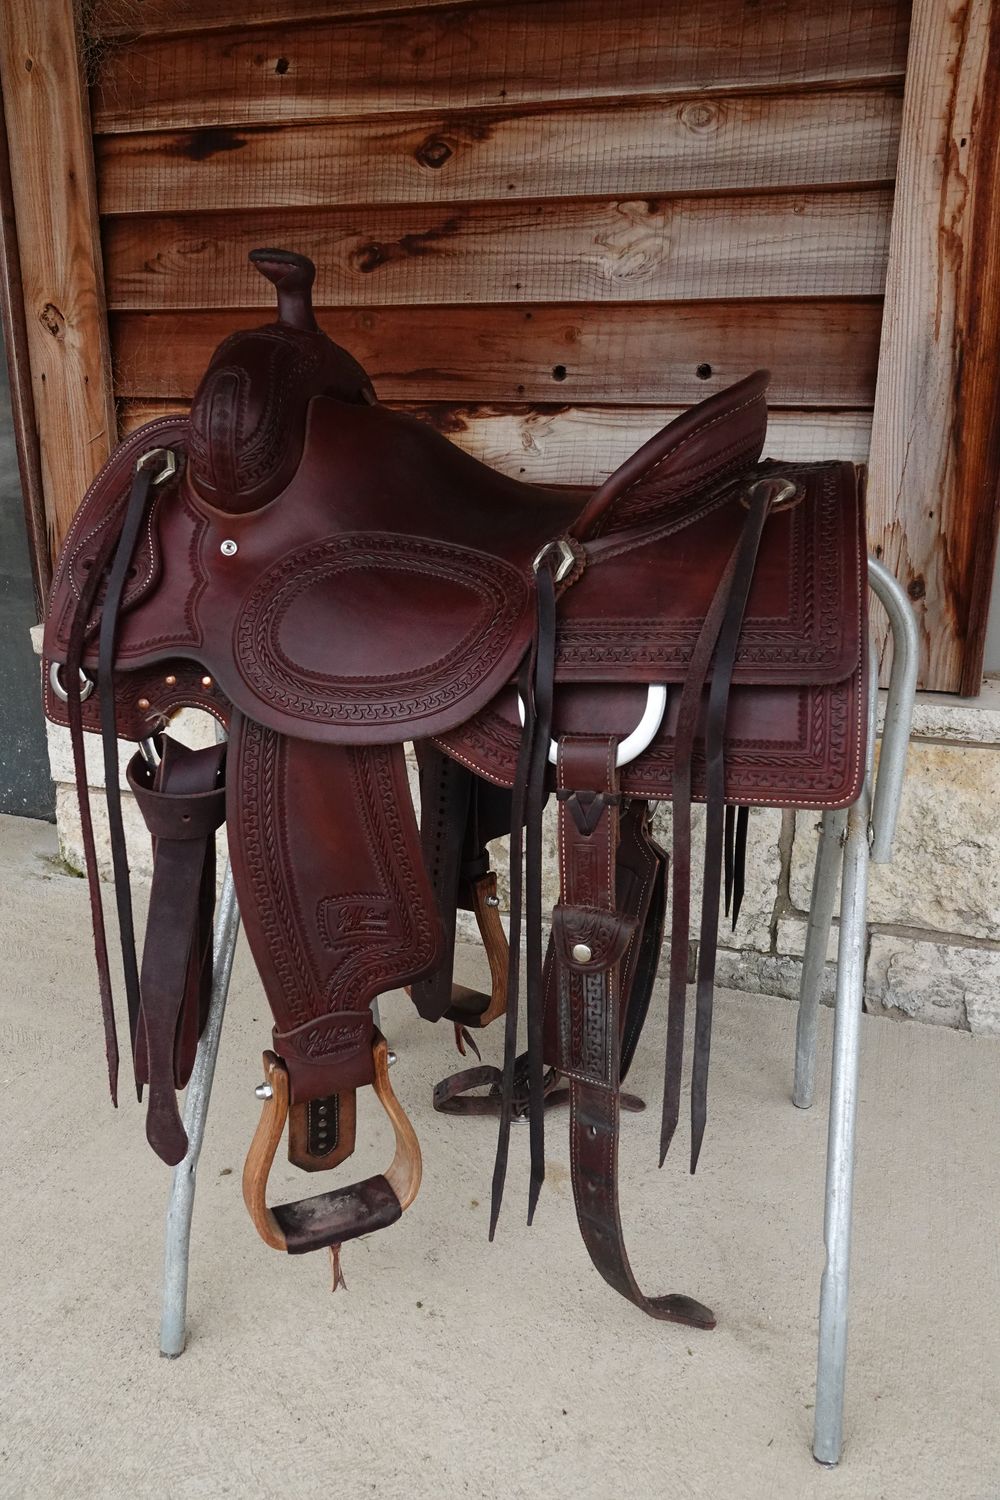 15" near NEW Jeff Smith Reined Cowhorse saddle - $2,650